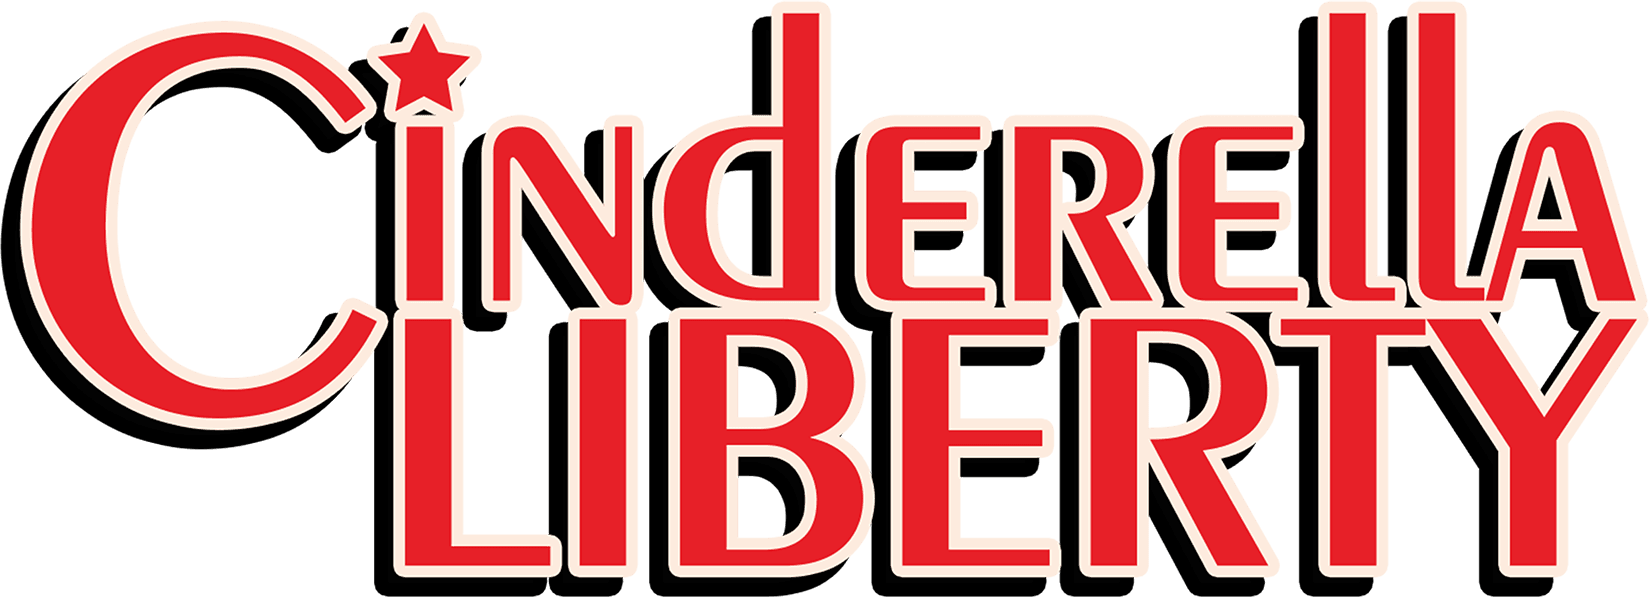 Cinderella Liberty logo